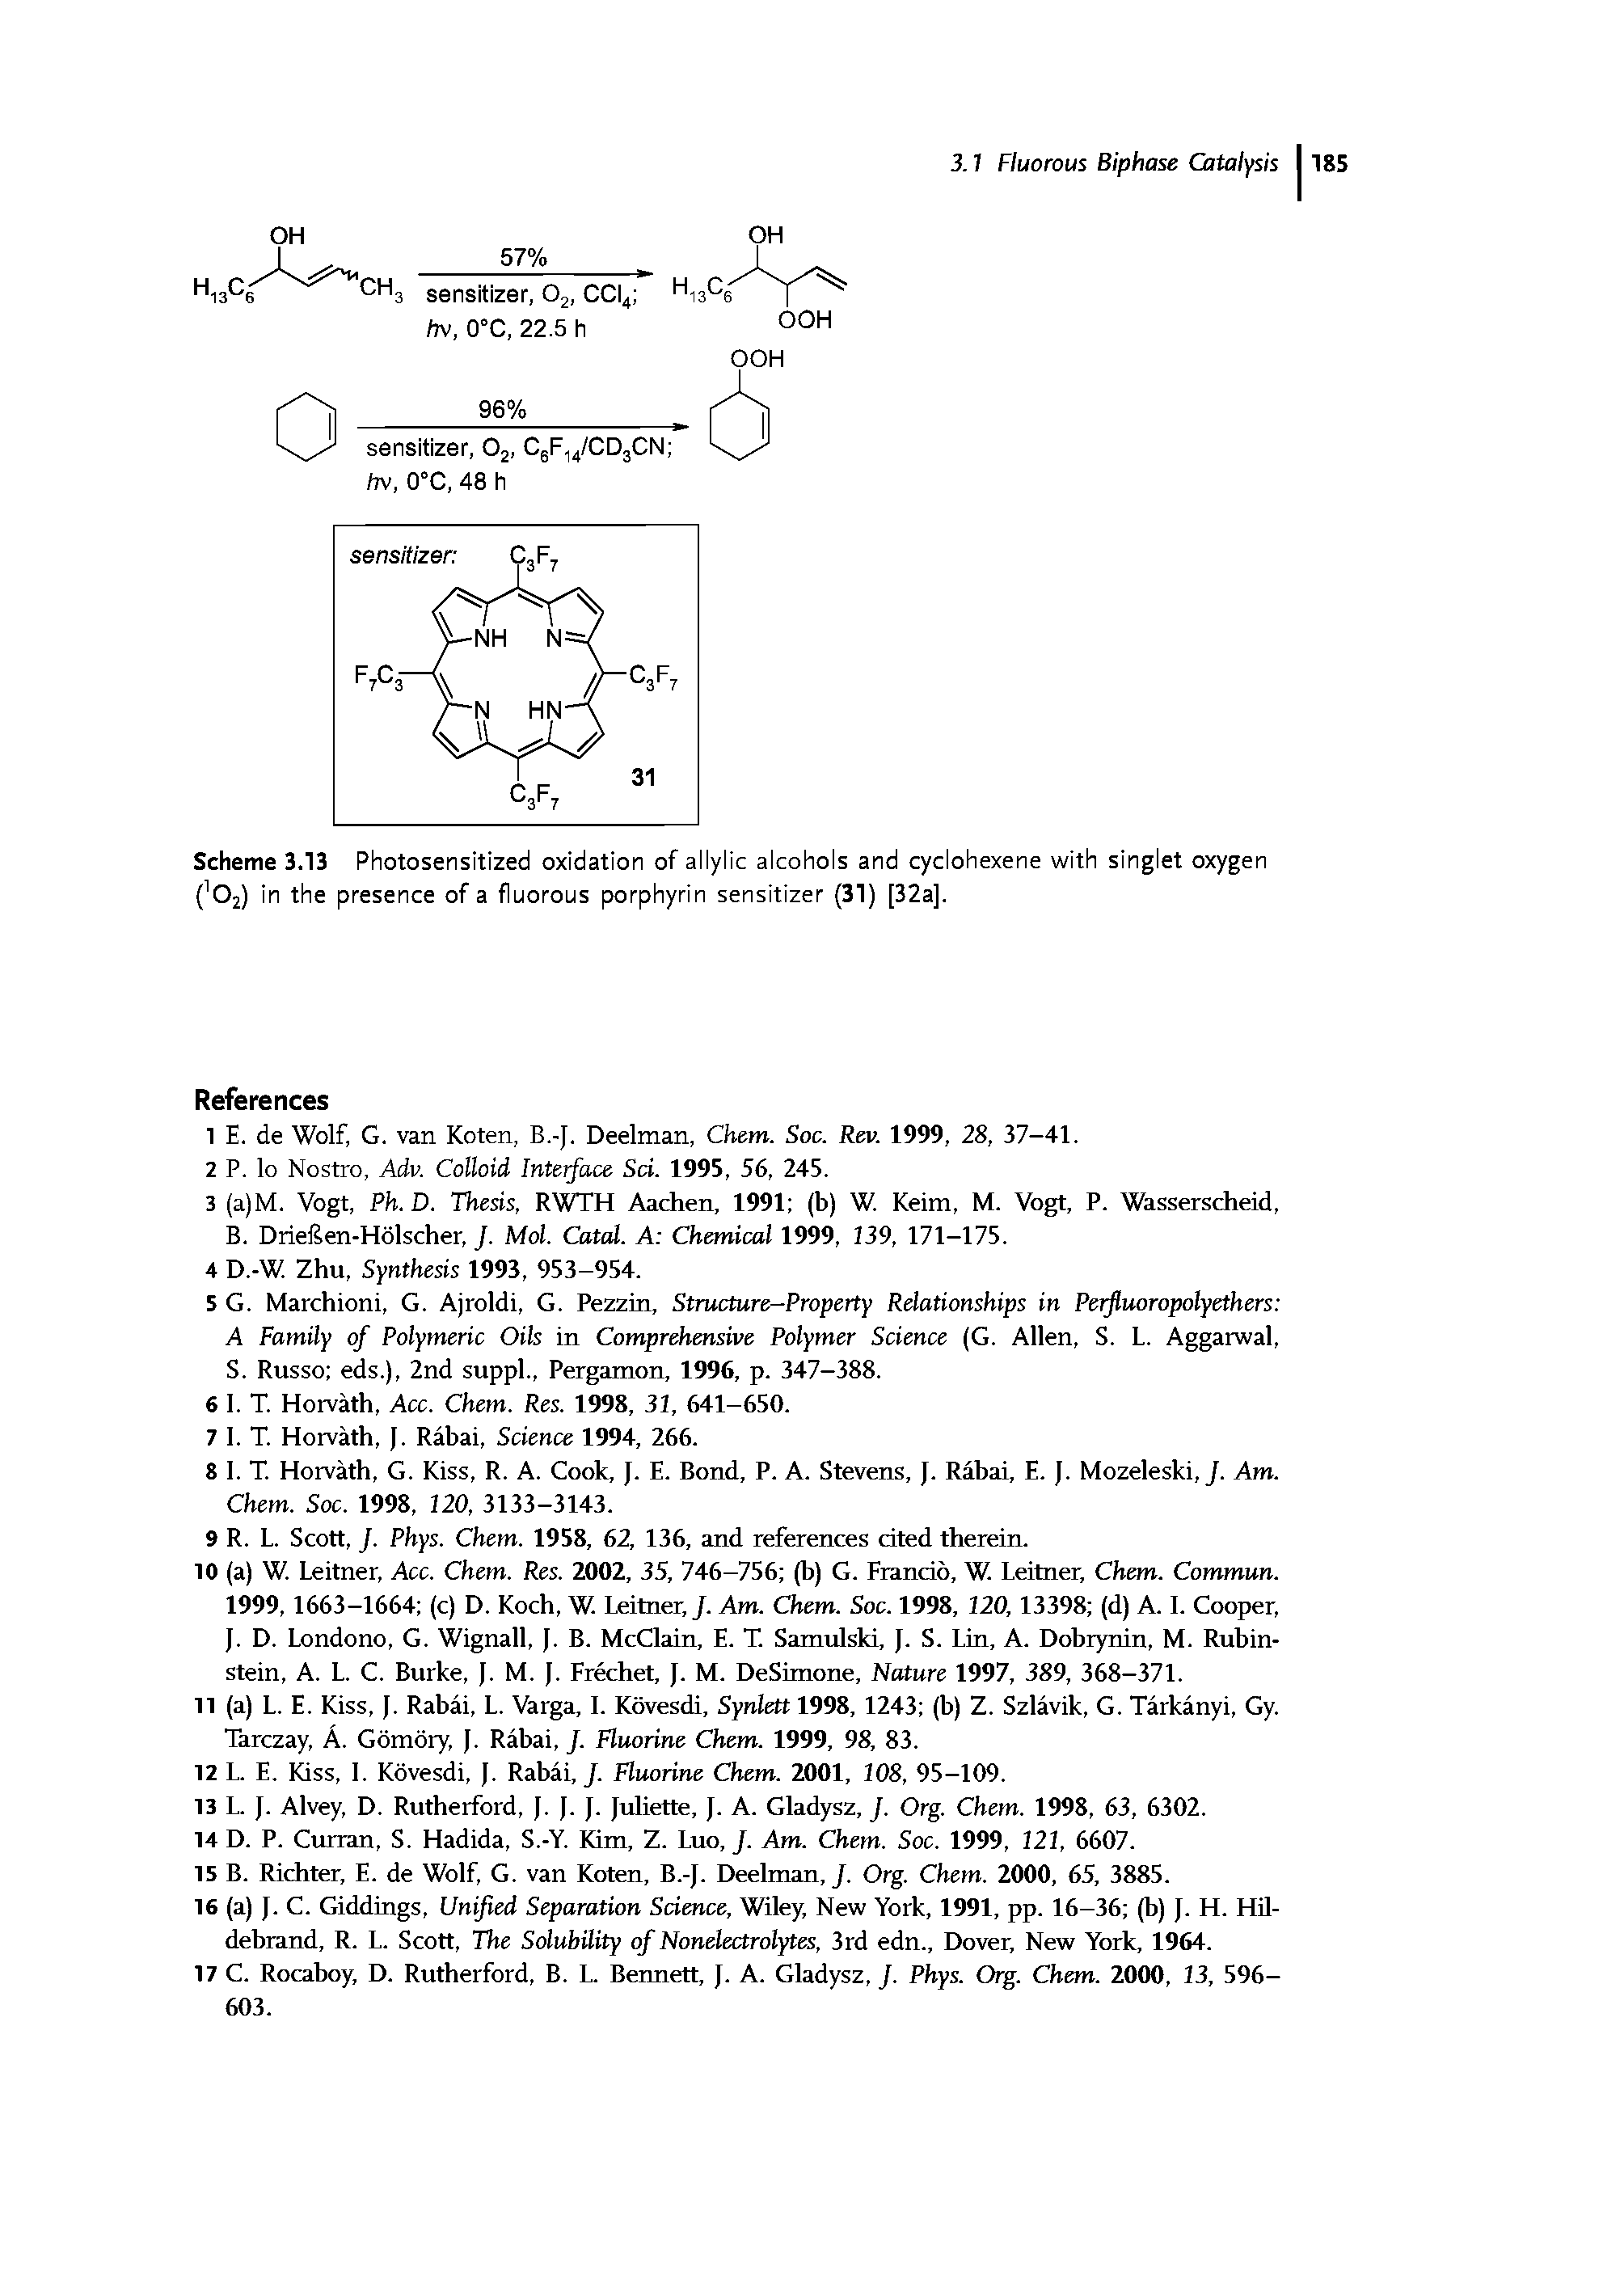 Scheme 3.13 Photosensitized oxidation of allylic alcohols and cyclohexene with singlet oxygen ( O2) in the presence of a fluorous porphyrin sensitizer (31) [32a].